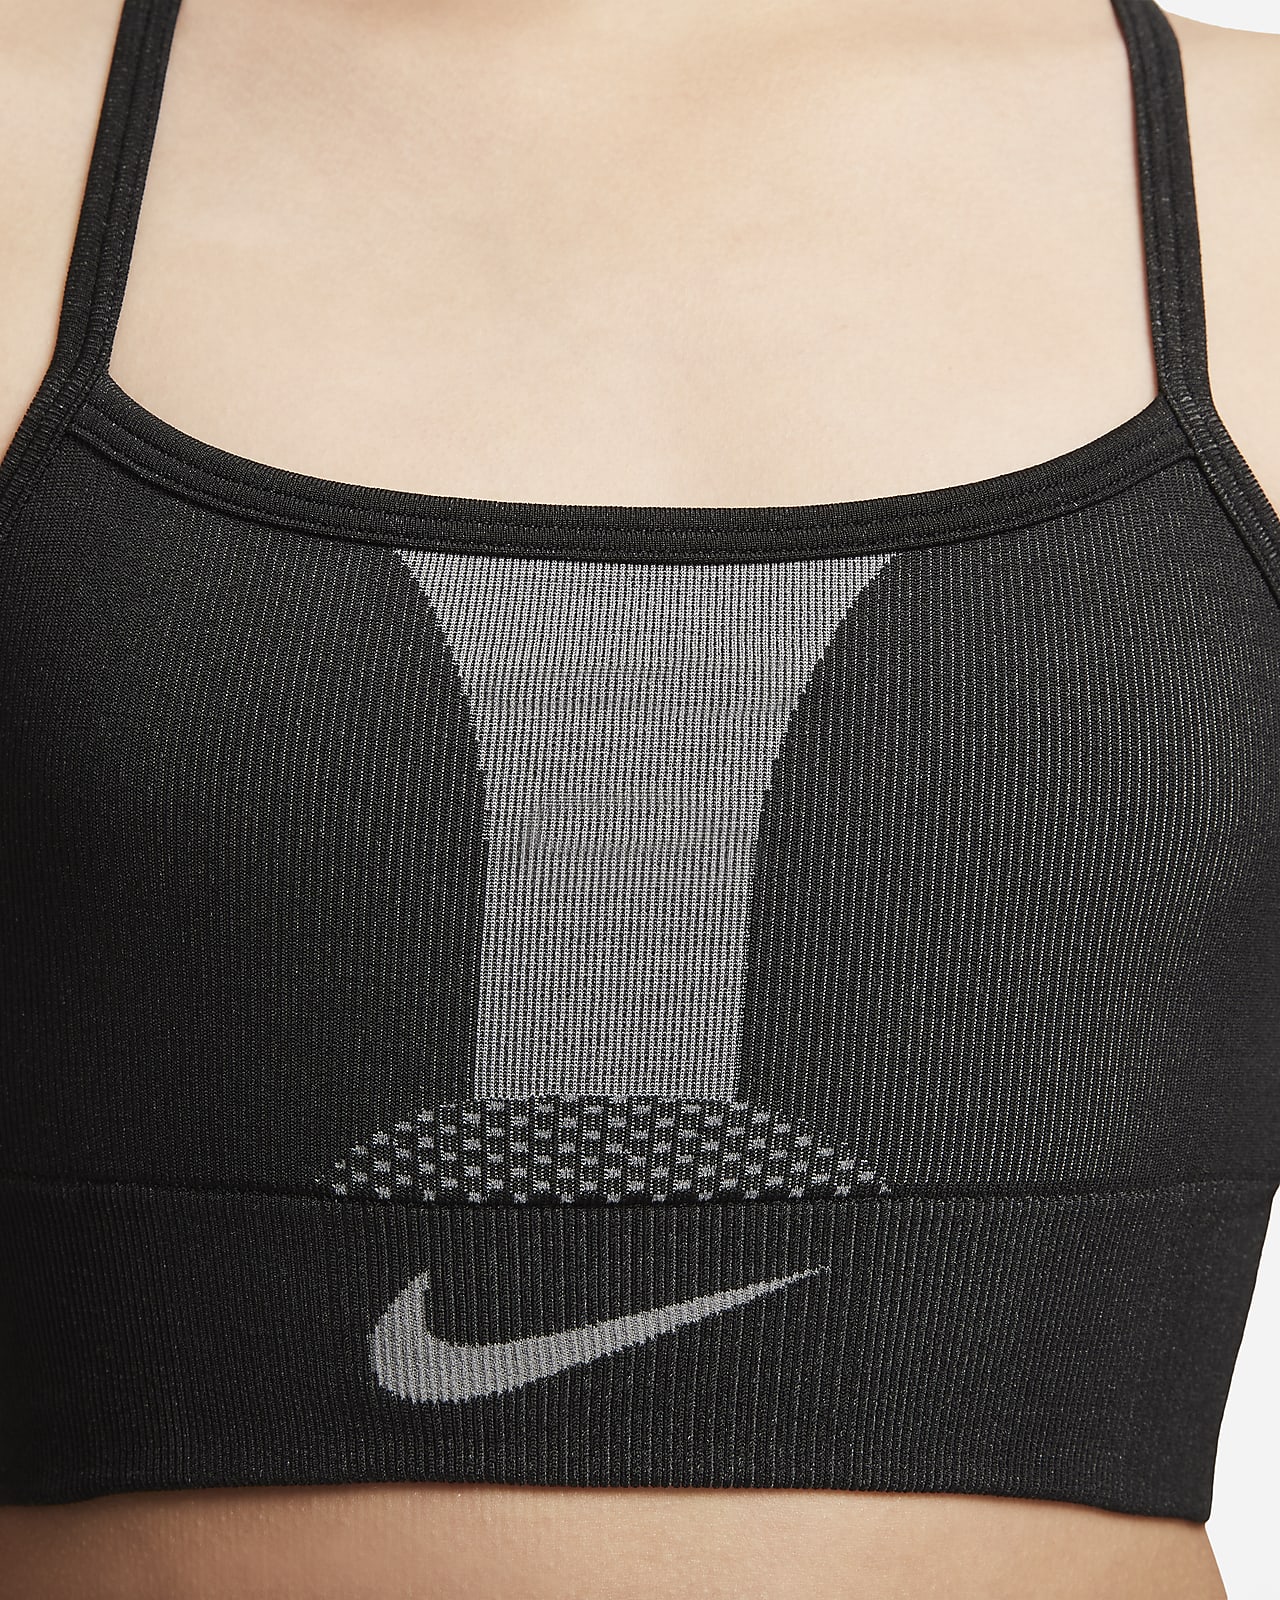 Nike Girls' Seamless Sports Bra